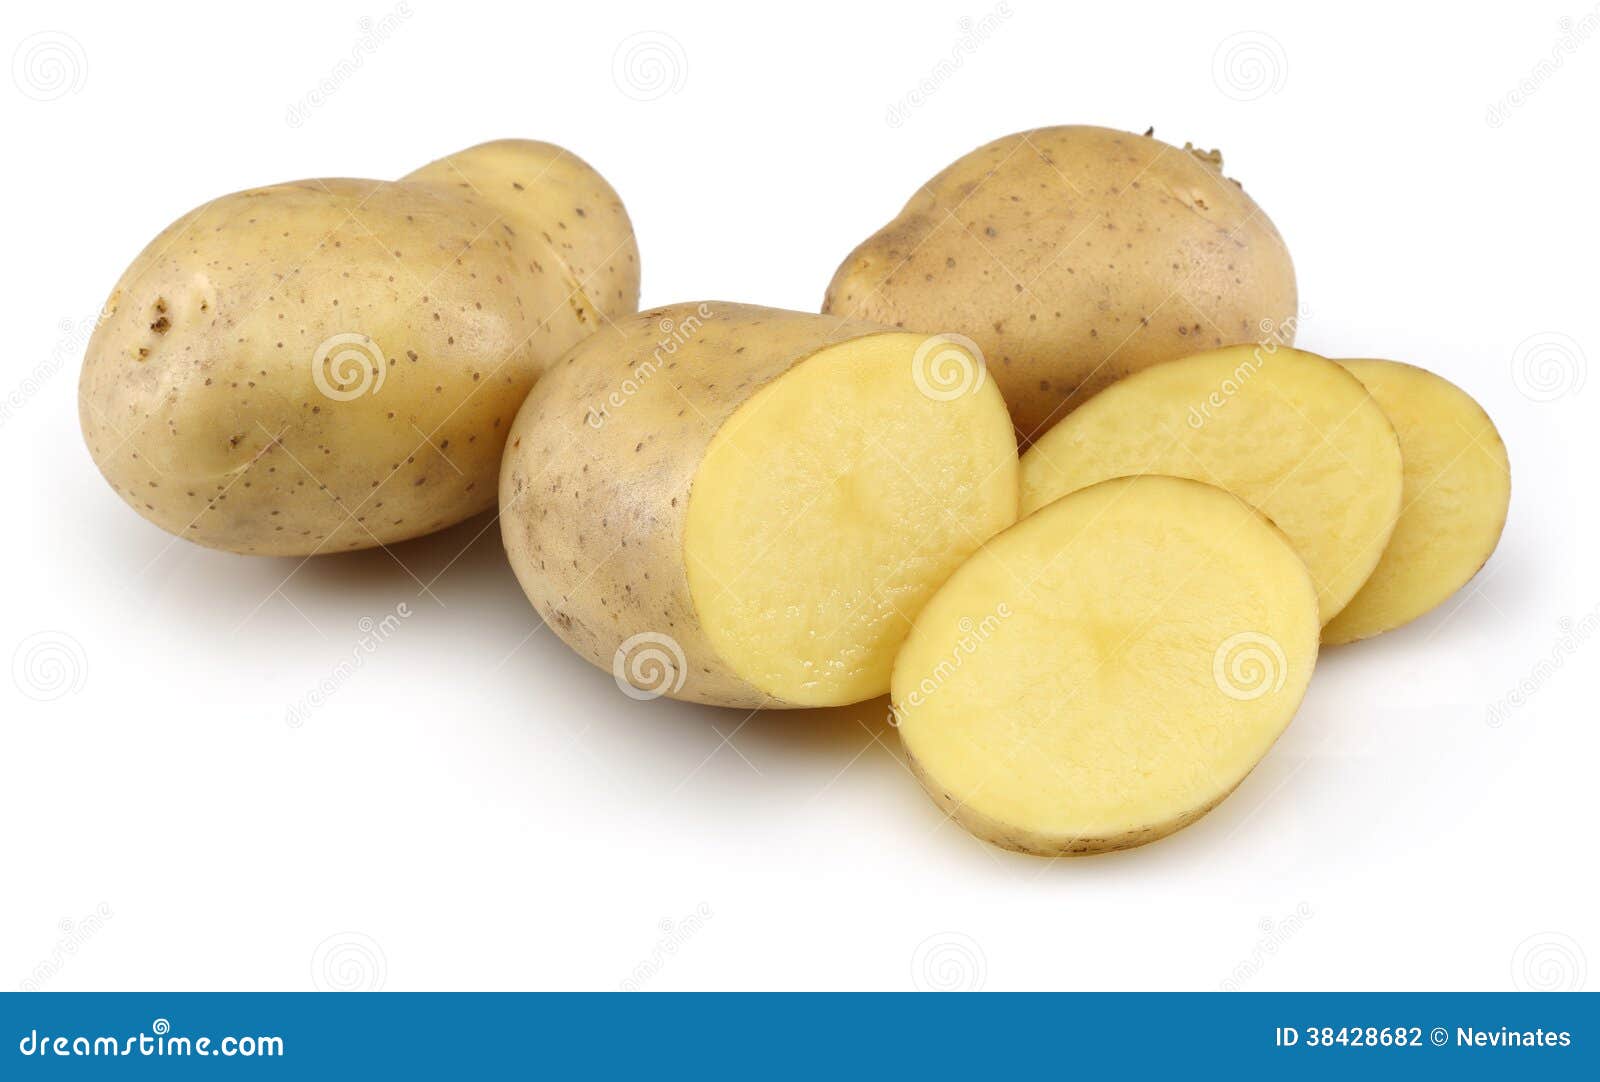 raw potato and sliced potato